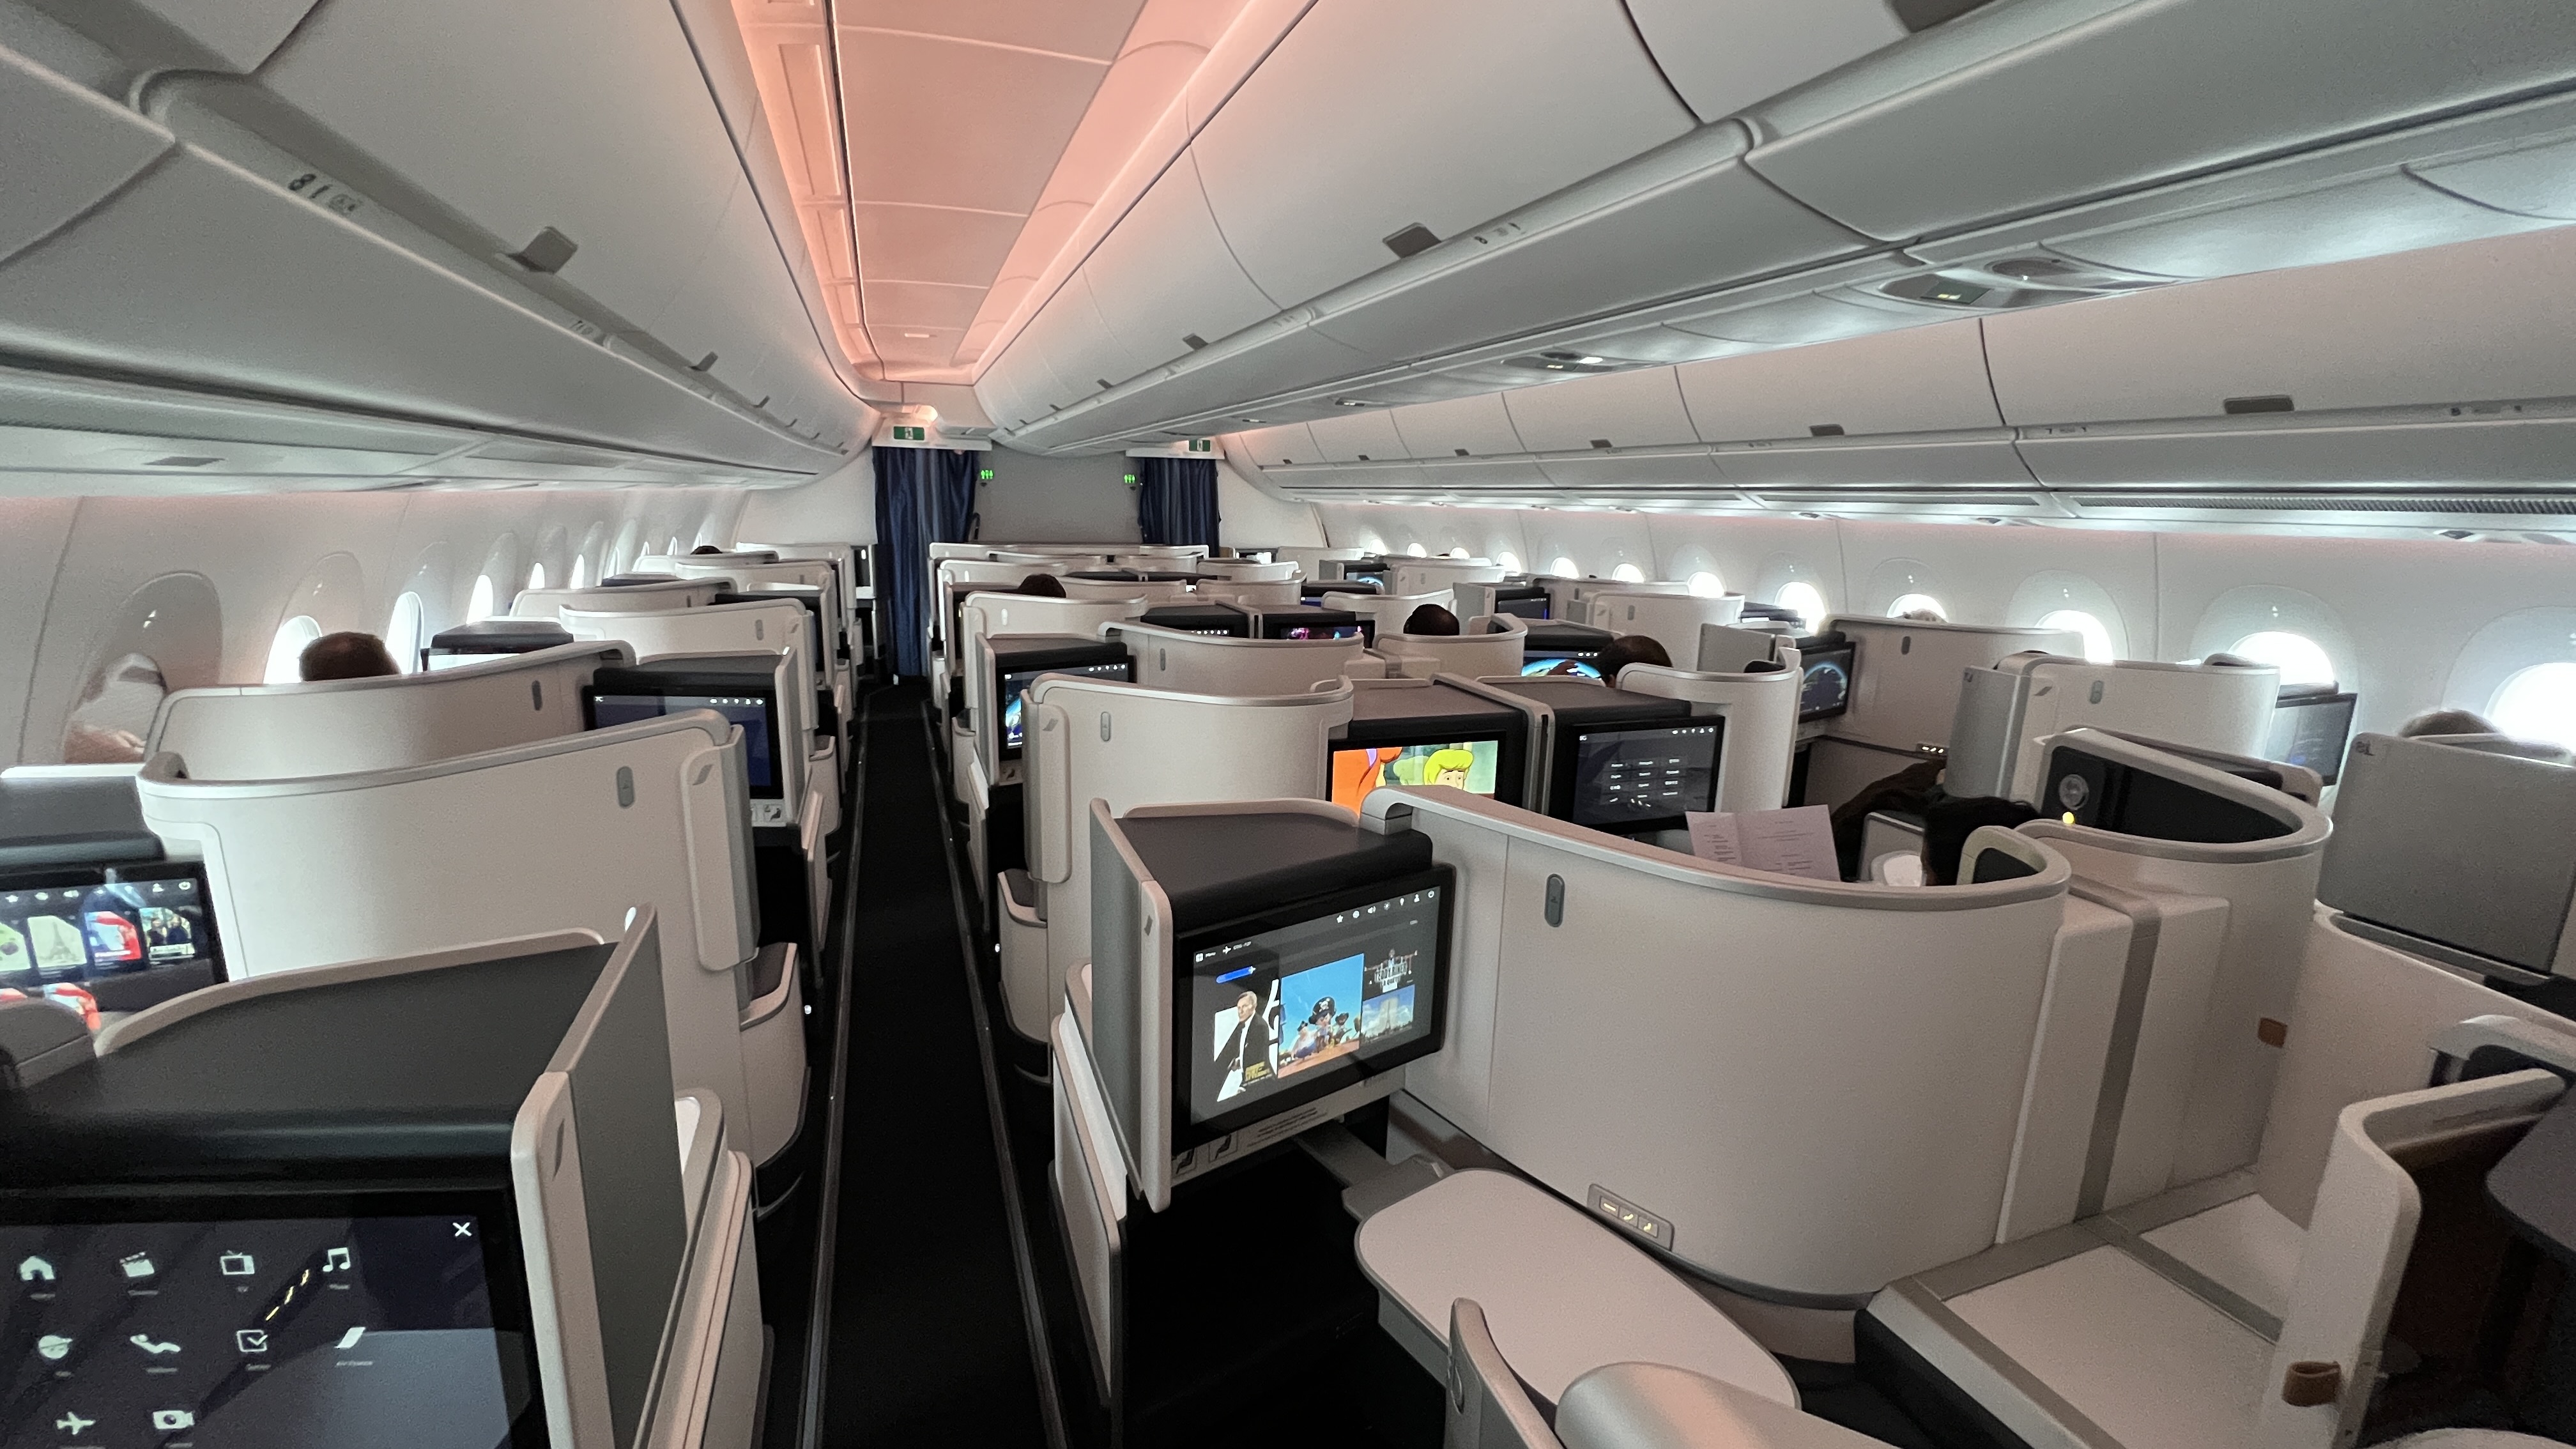 Targeted: Huge 20k bonuses with Amex Offers on KLM + Air France ...